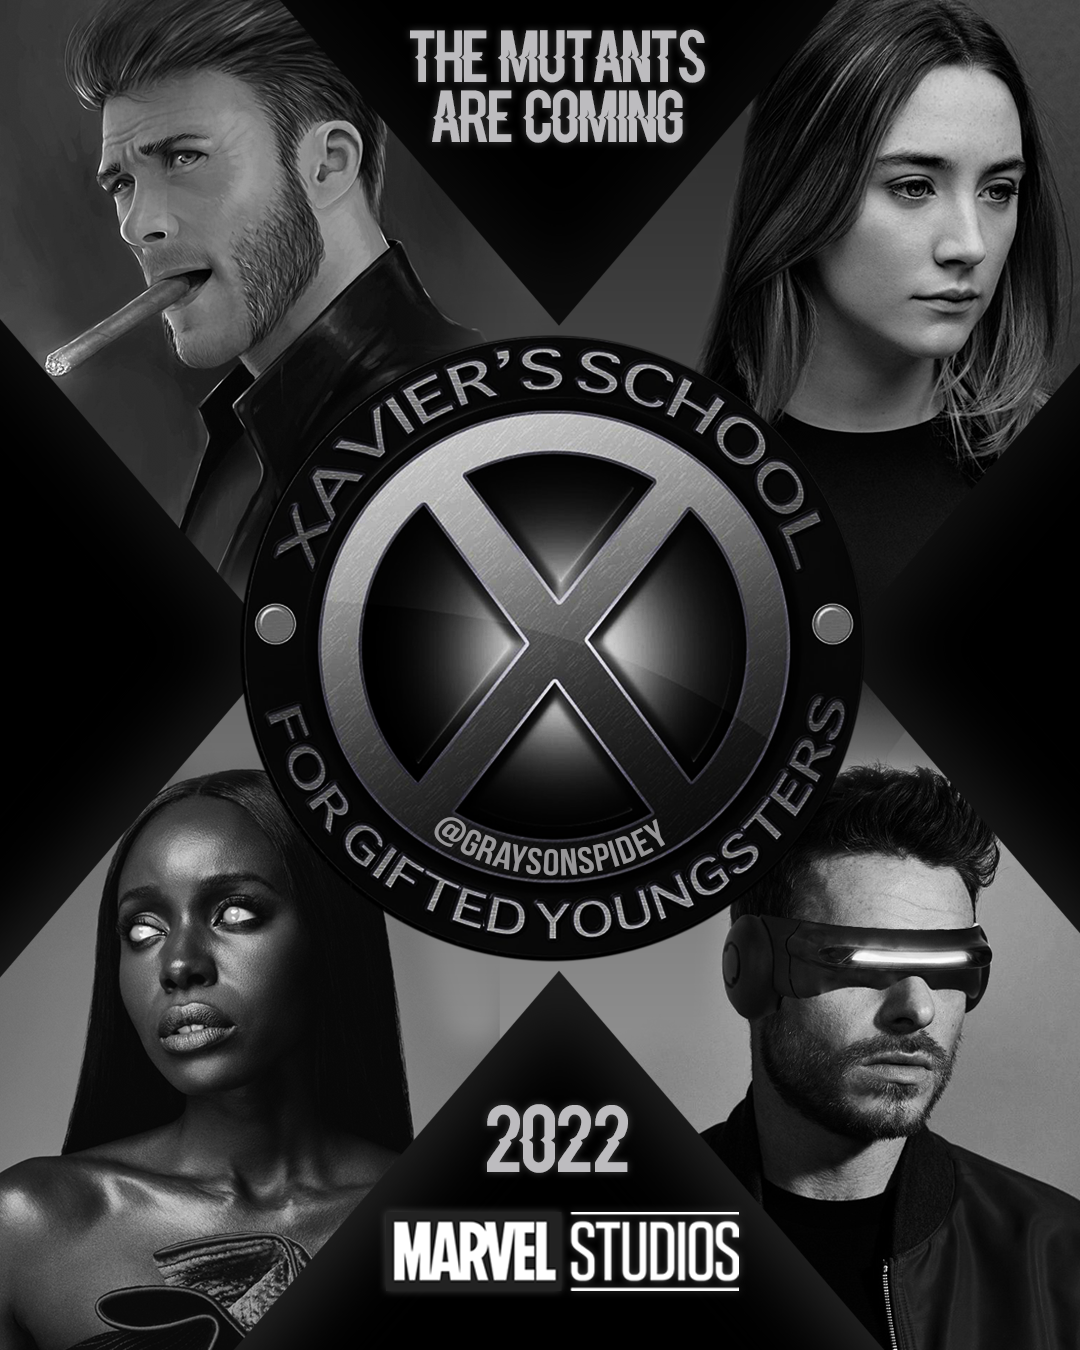 Mcu X Men Teaser Poster By Graysonspidey On Deviantart